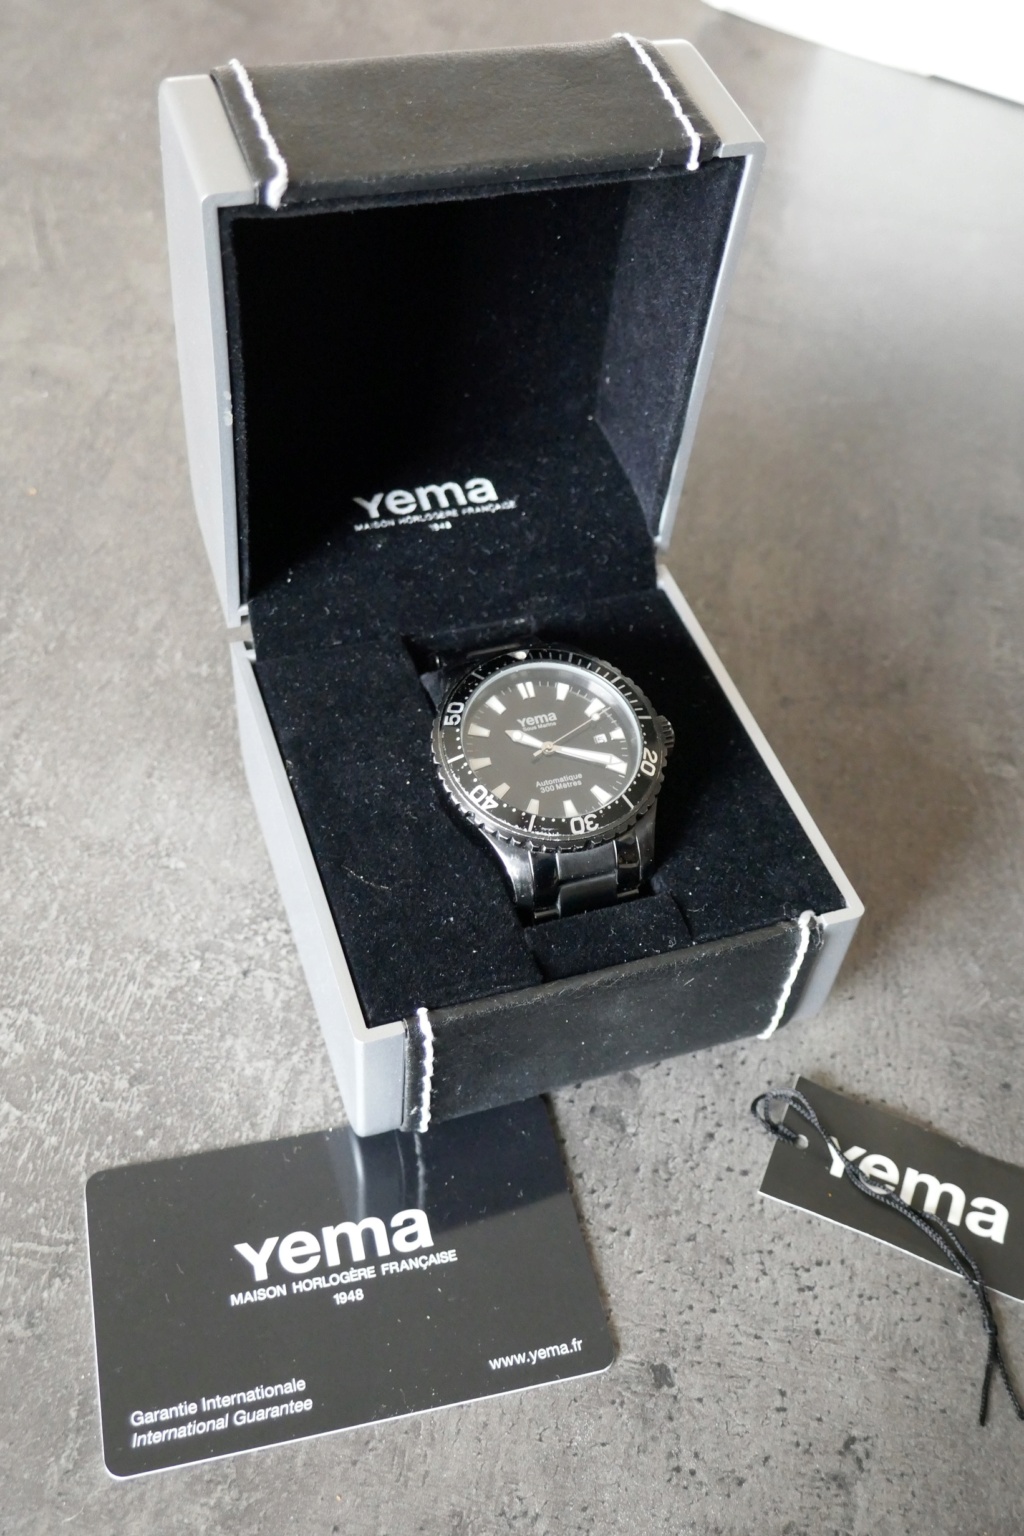 Yema - [Baisse de prix][Vends] YEMA Sous-Marine - ref YA3831 P1070020